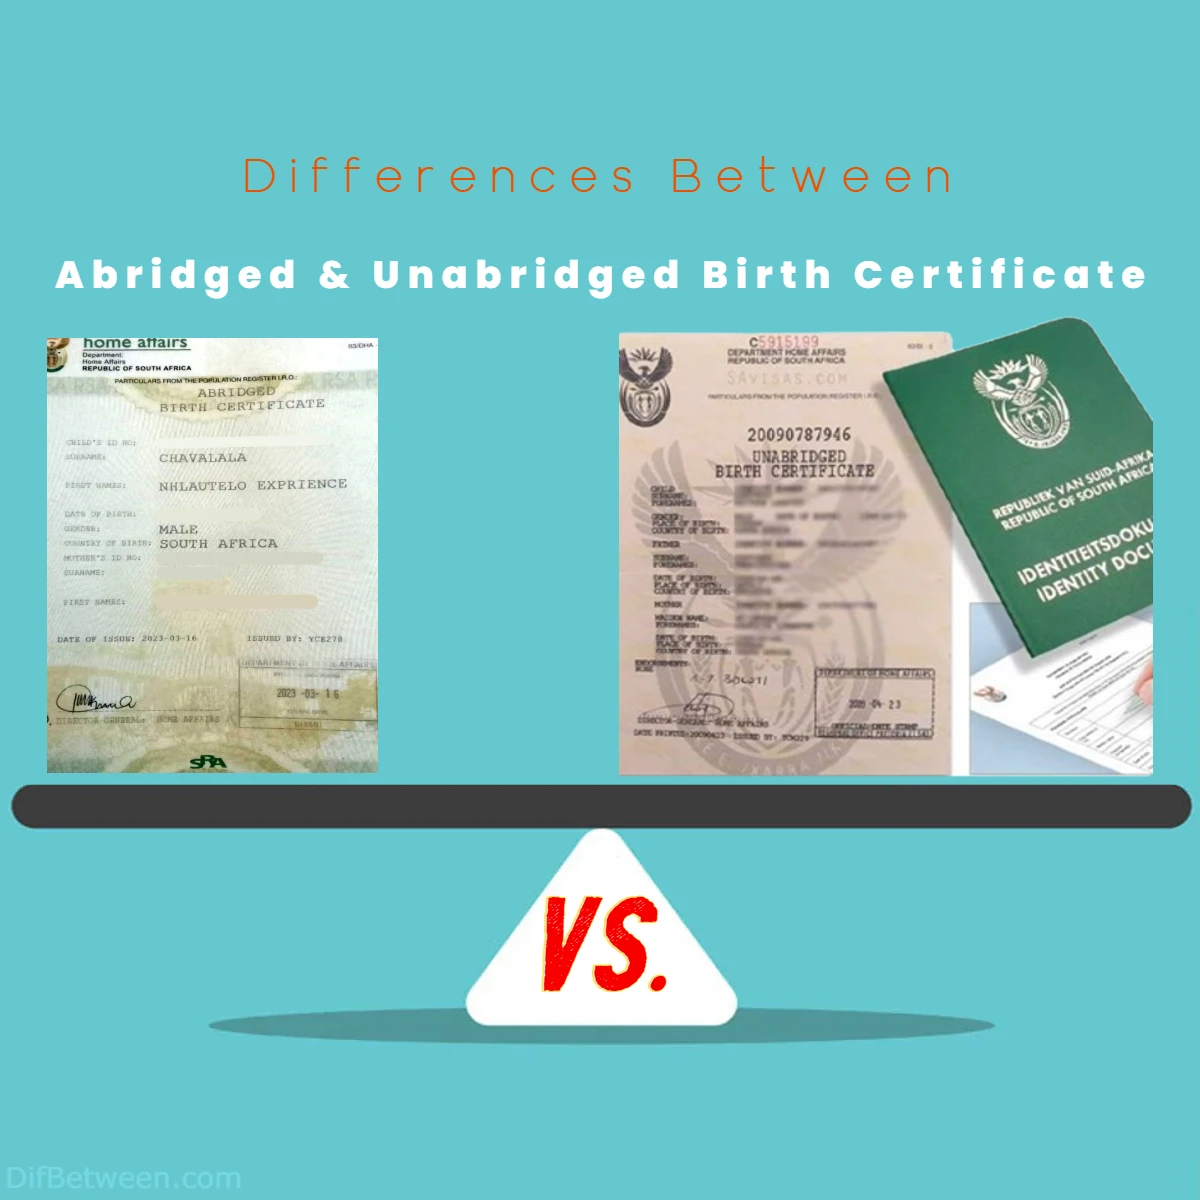 Differences Between Abridged vs Unabridged Birth Certificate